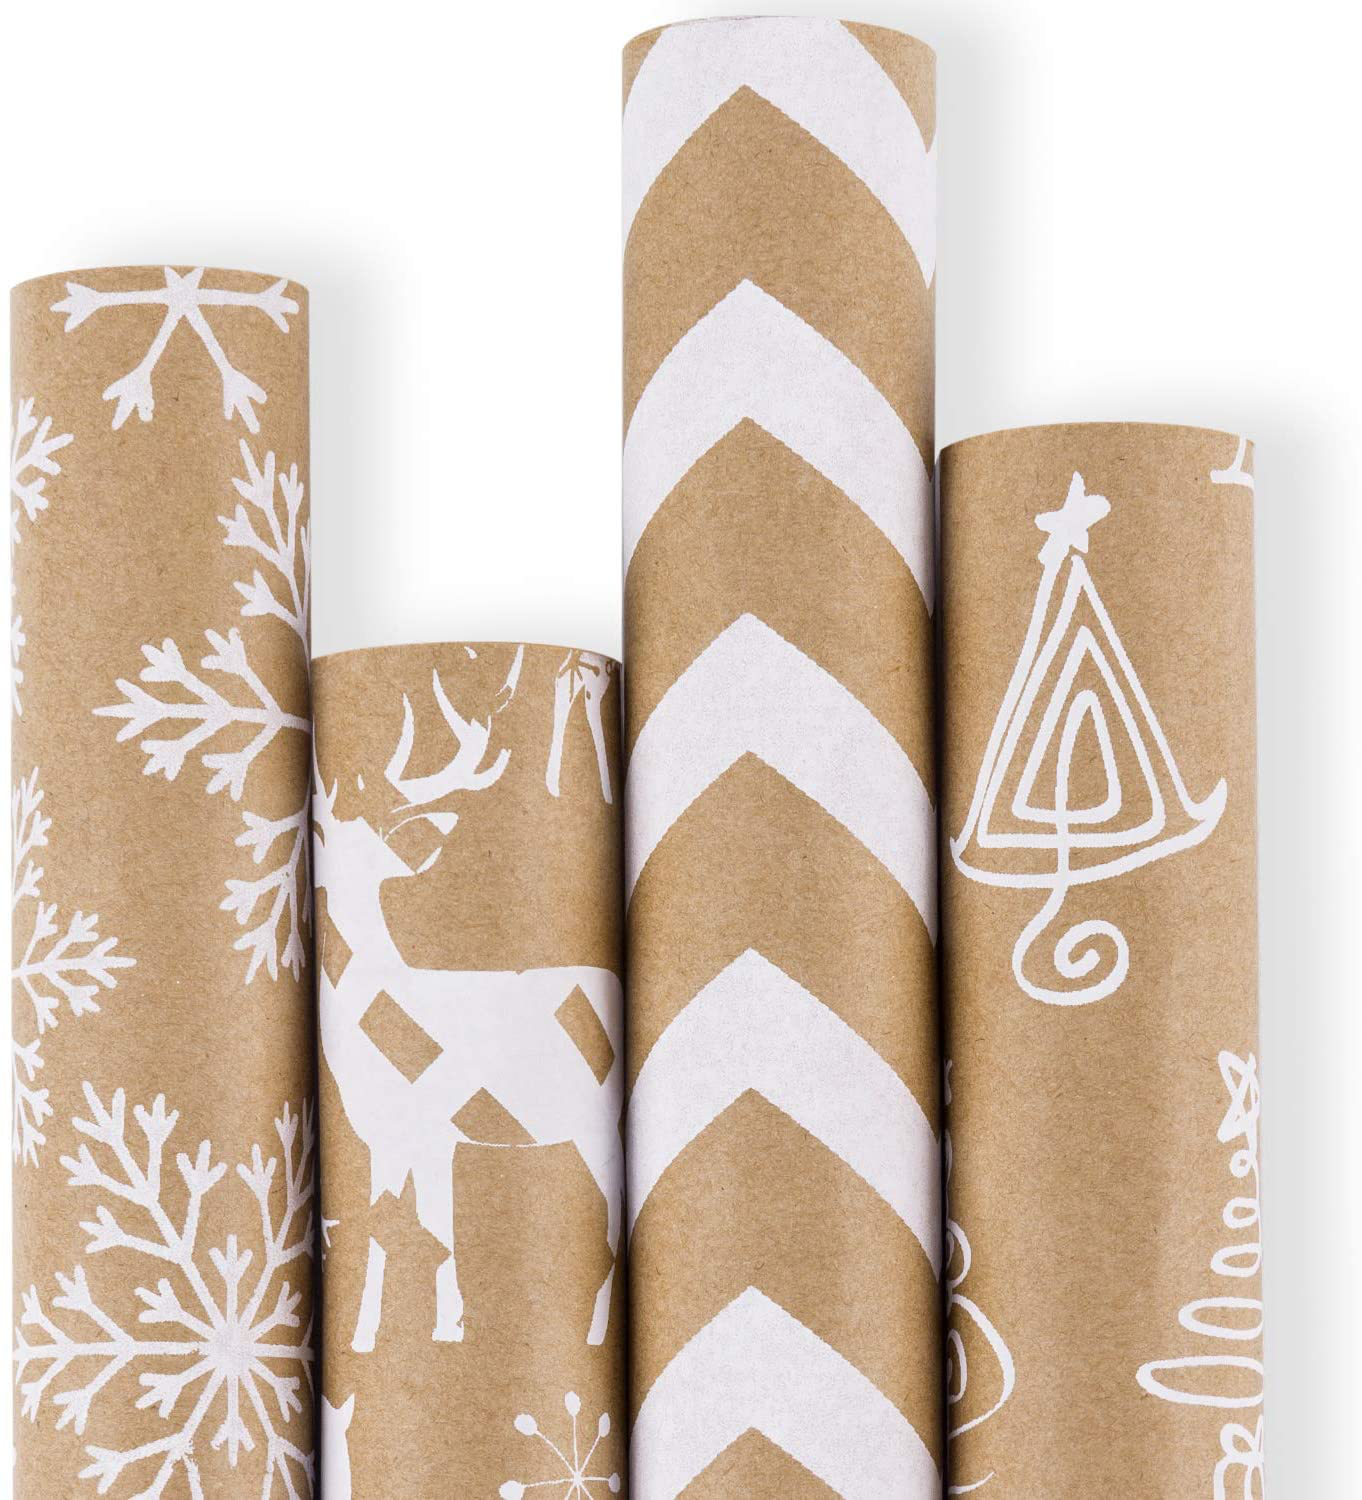 RUSPEPA Christmas Wrapping Paper -  Christmas Elements Print Paper - 4 Roll-30Inch X 10Feet per Roll